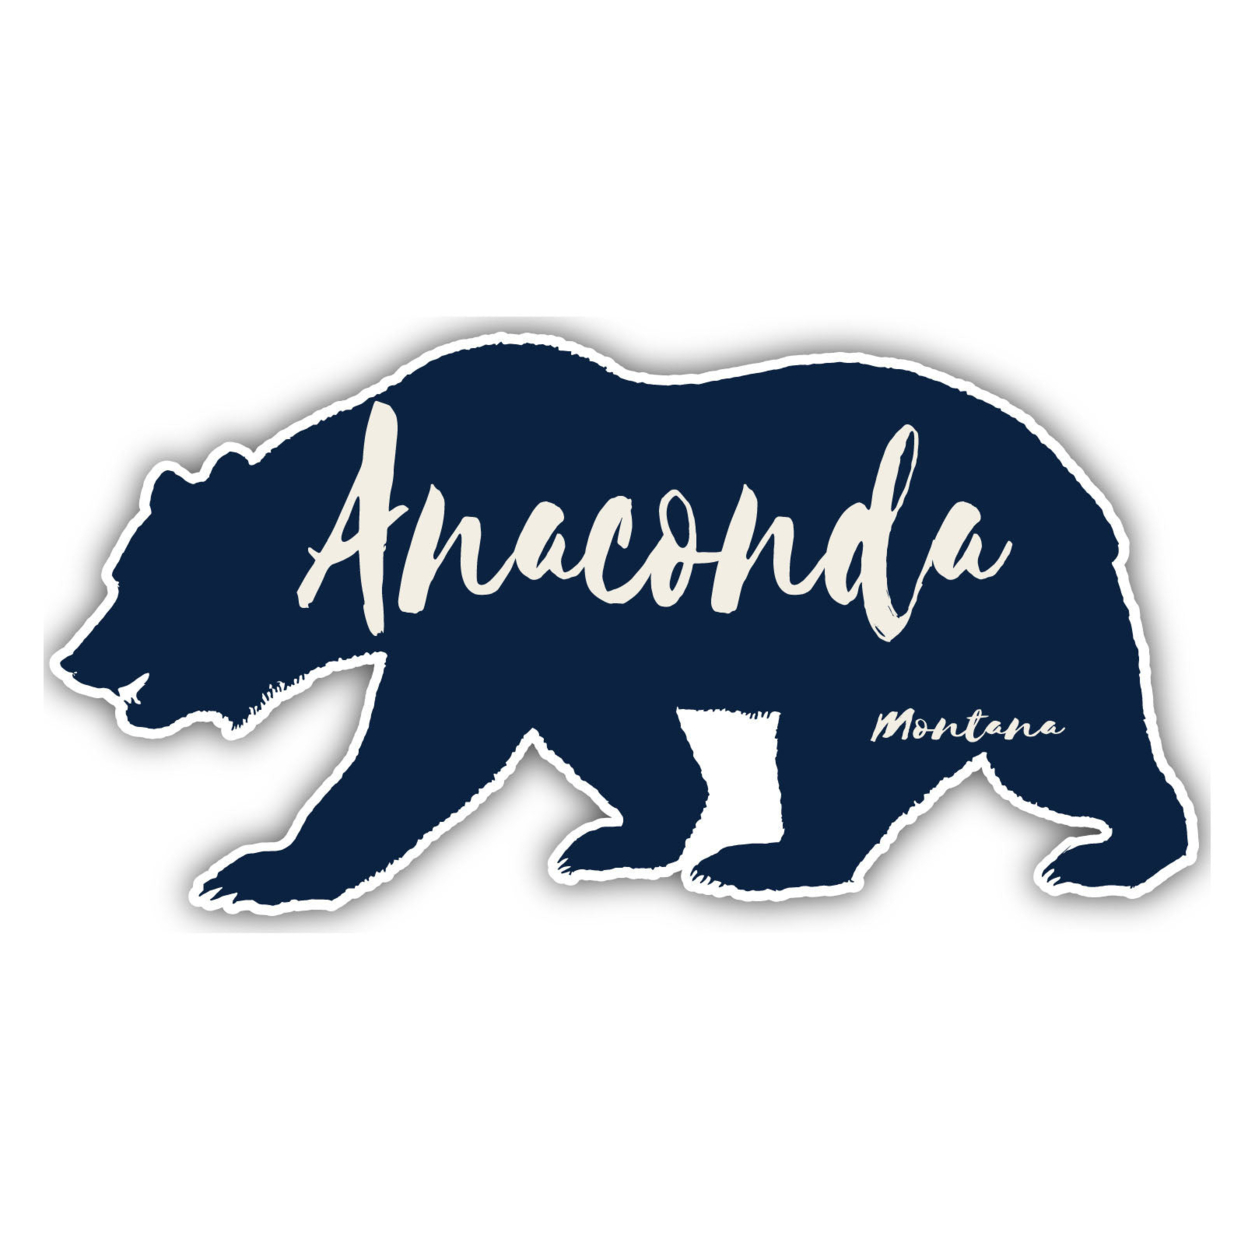 Anaconda Montana Souvenir Decorative Stickers (Choose Theme And Size) - 4-Pack, 10-Inch, Bear